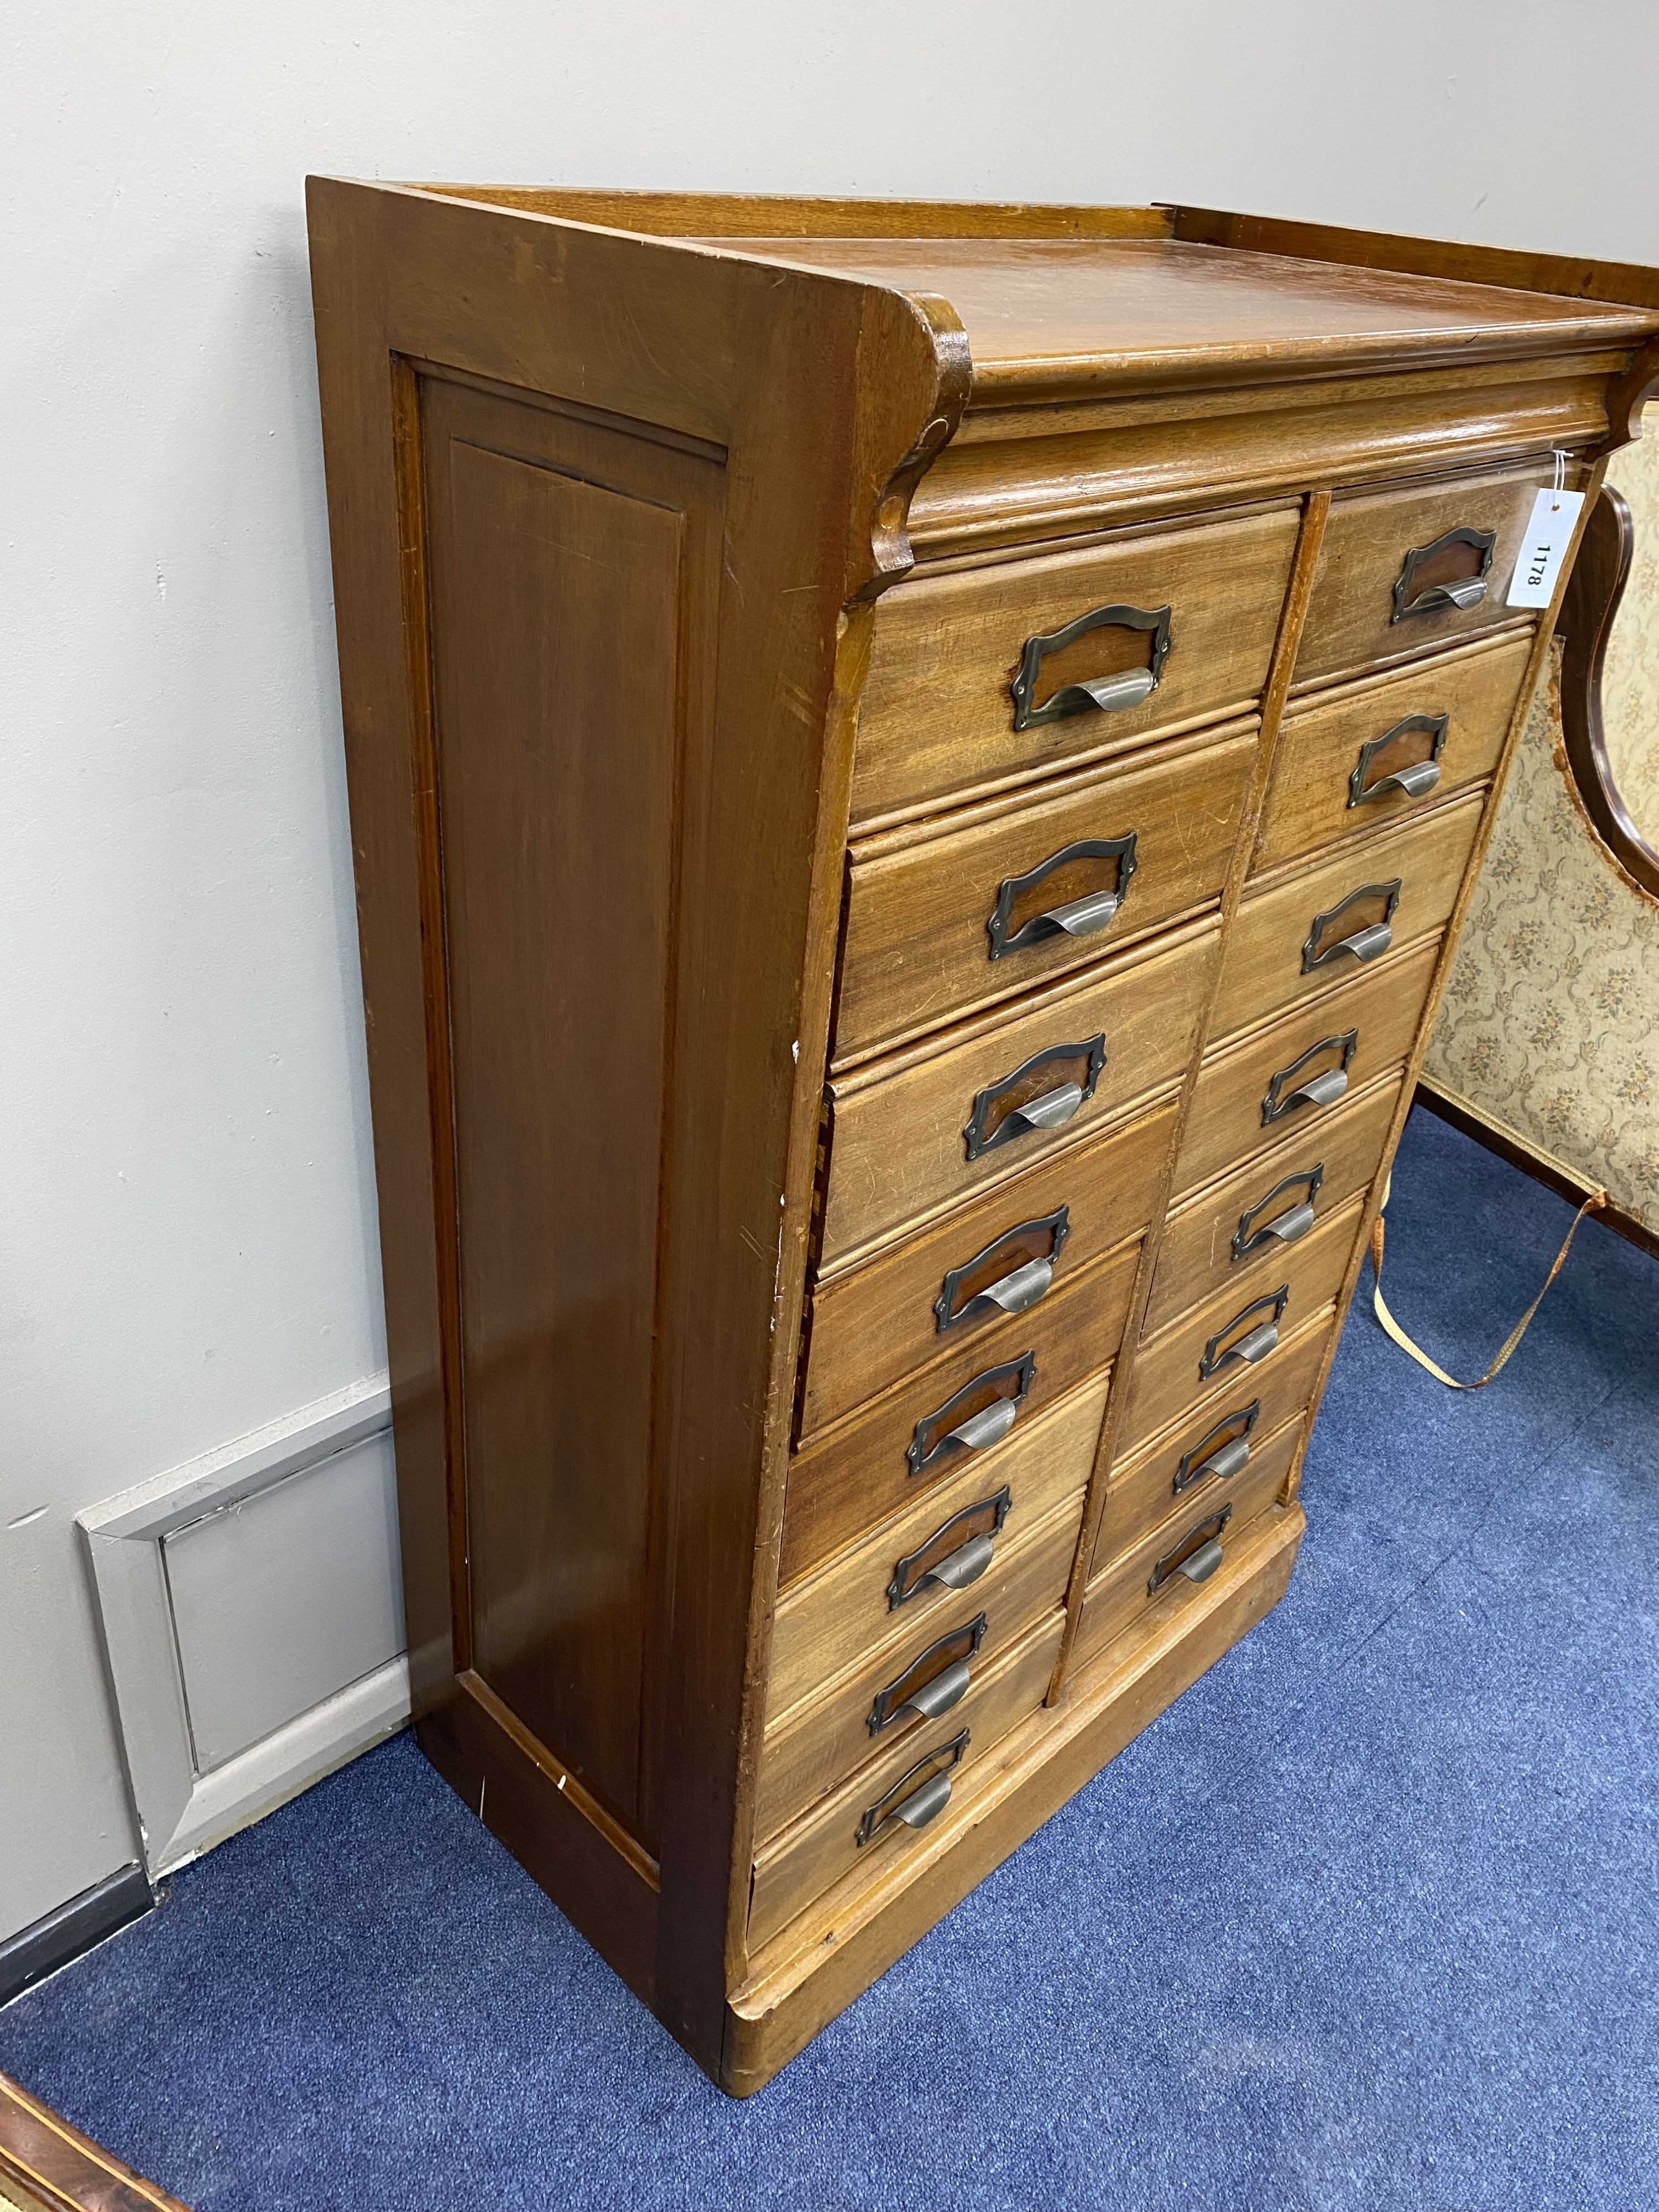 An early 20th century walnut filing cabinet, width 70cm, depth 40cm, height 111cm